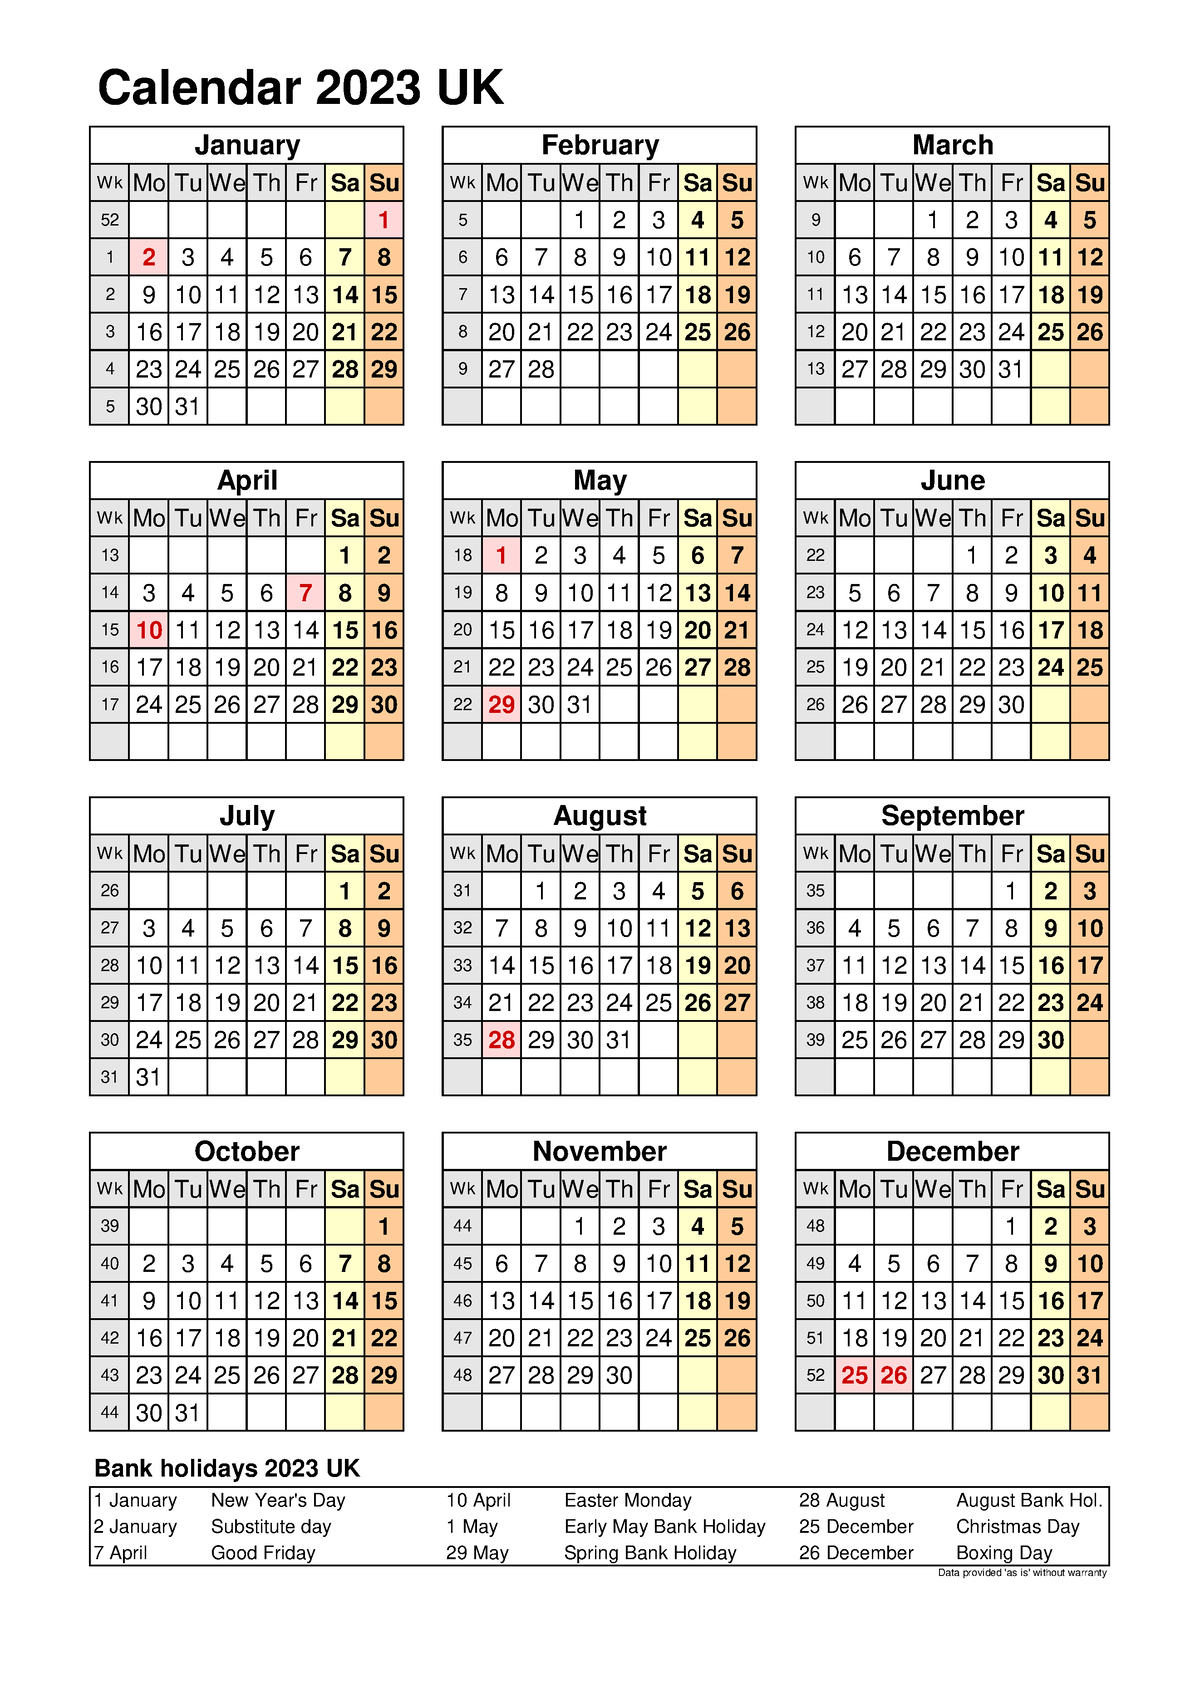 3. 2023 Calendar - hhh - Calendar 2023 UK Wk Mo Tu We Th Fr Sa Su Wk Mo ...